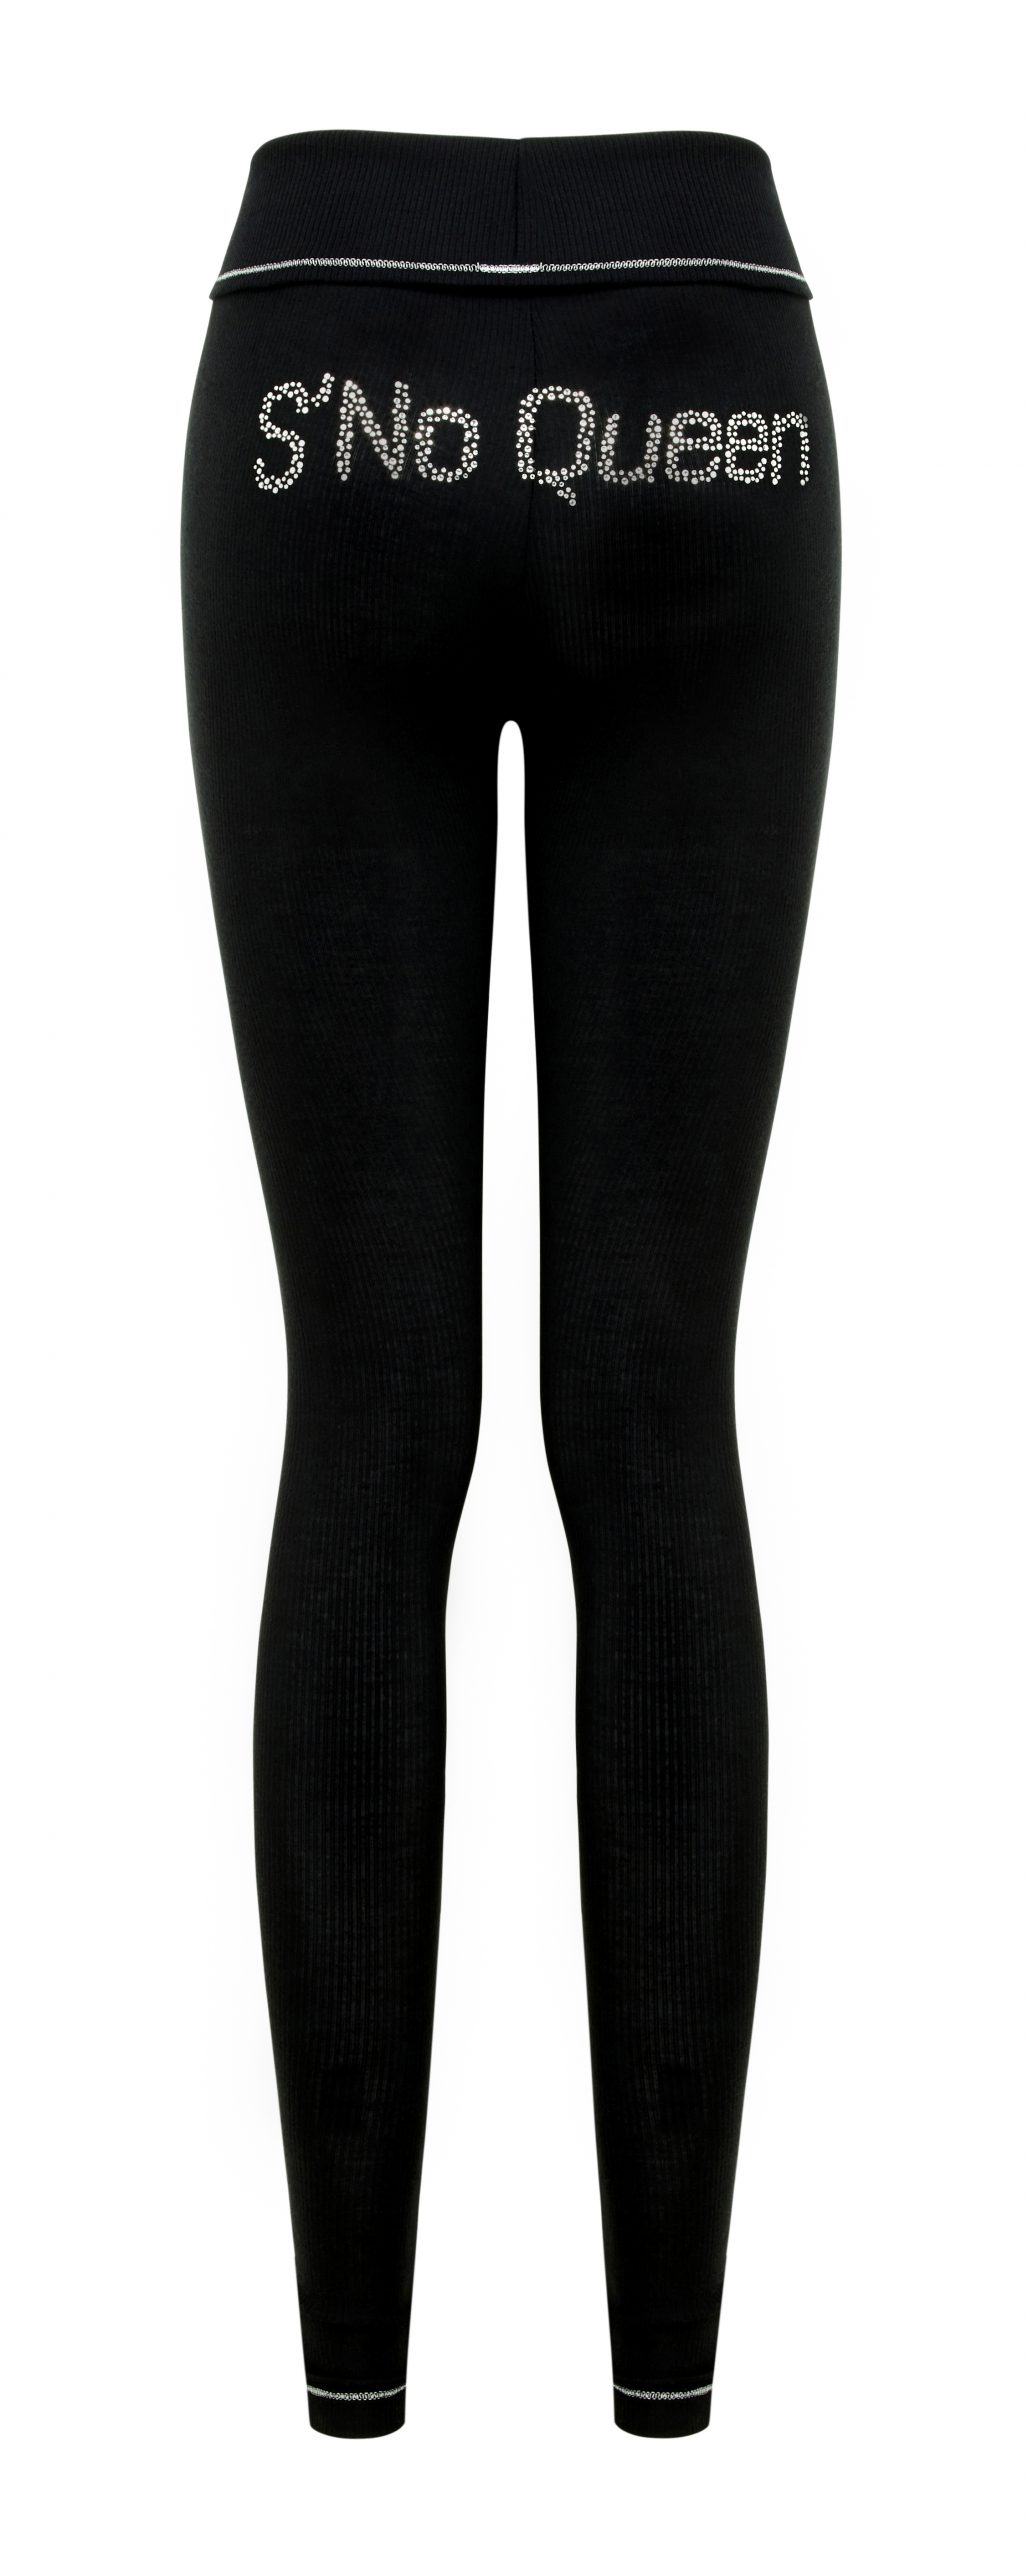 Black Leggings - Queen Collection thermal leggings